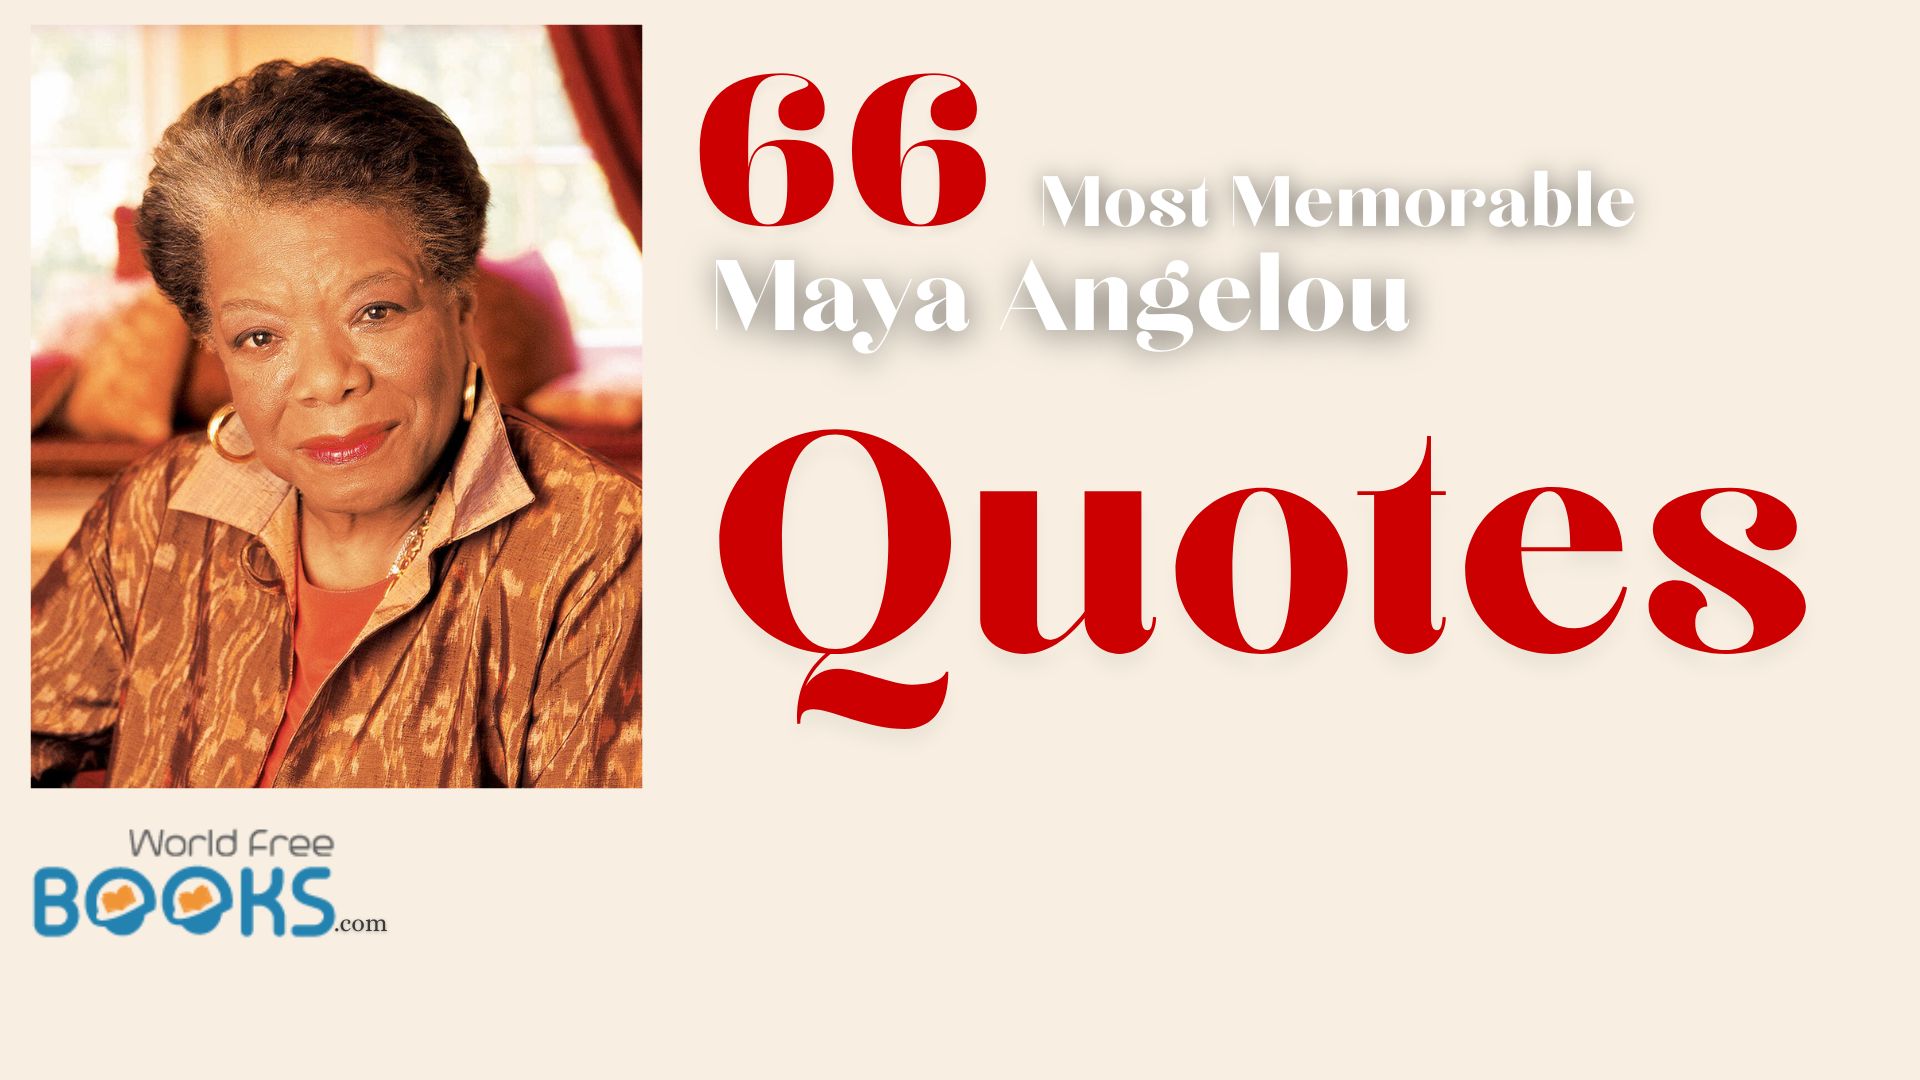 66 Most Memorable Maya Angelou Quotes